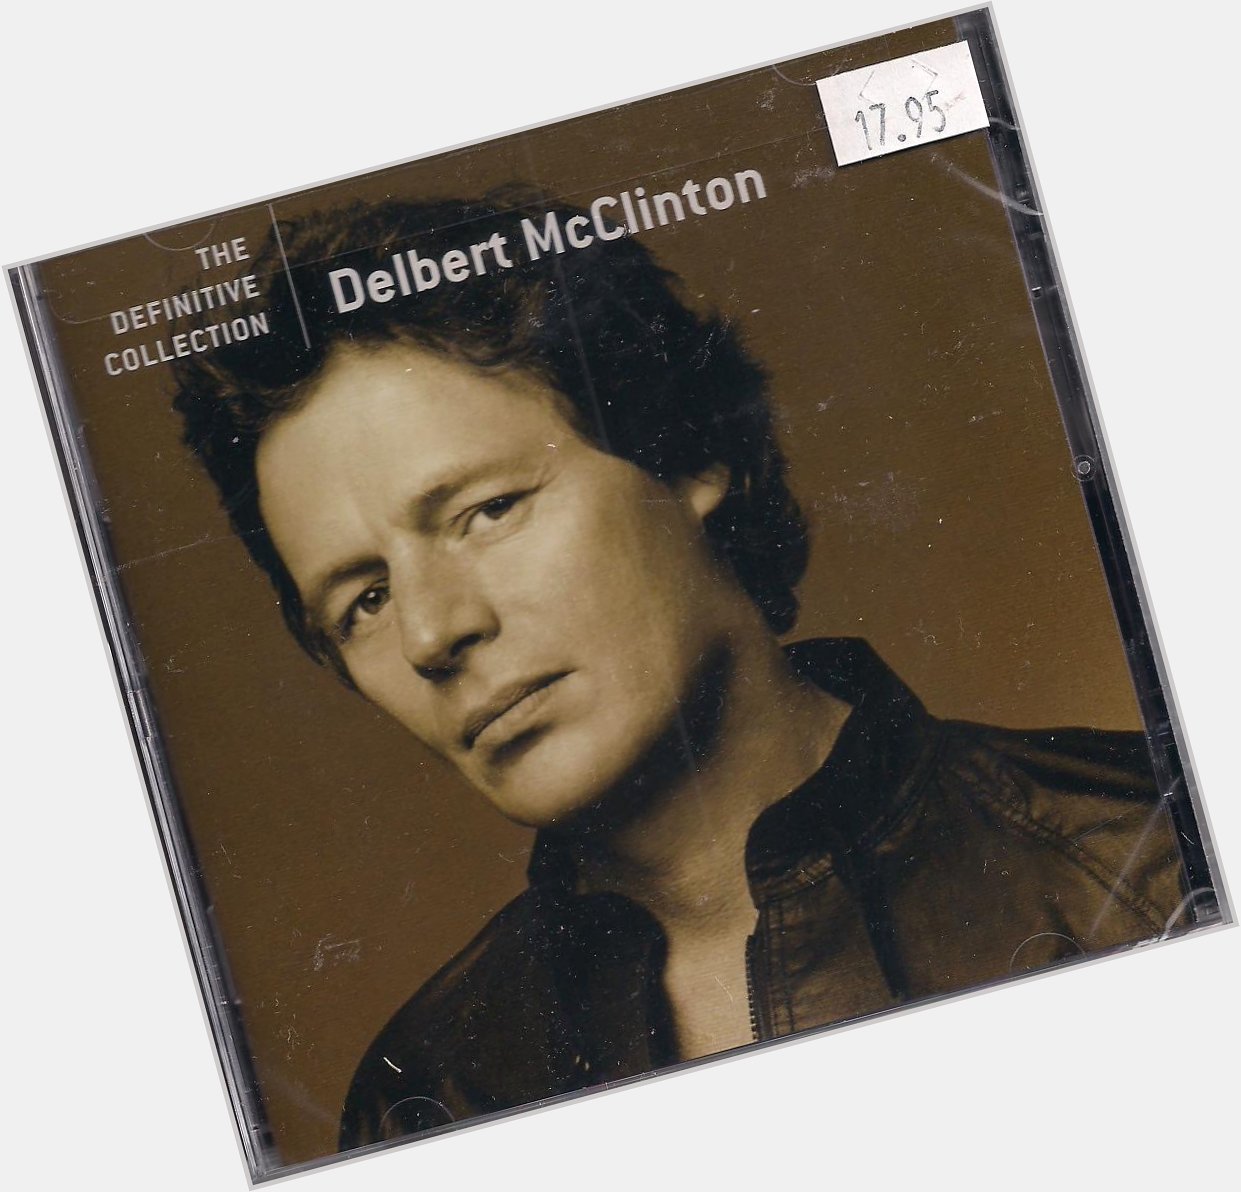 Delbert McClinton - Every Time I Roll the Dice  via Happy Birthday Delbert 